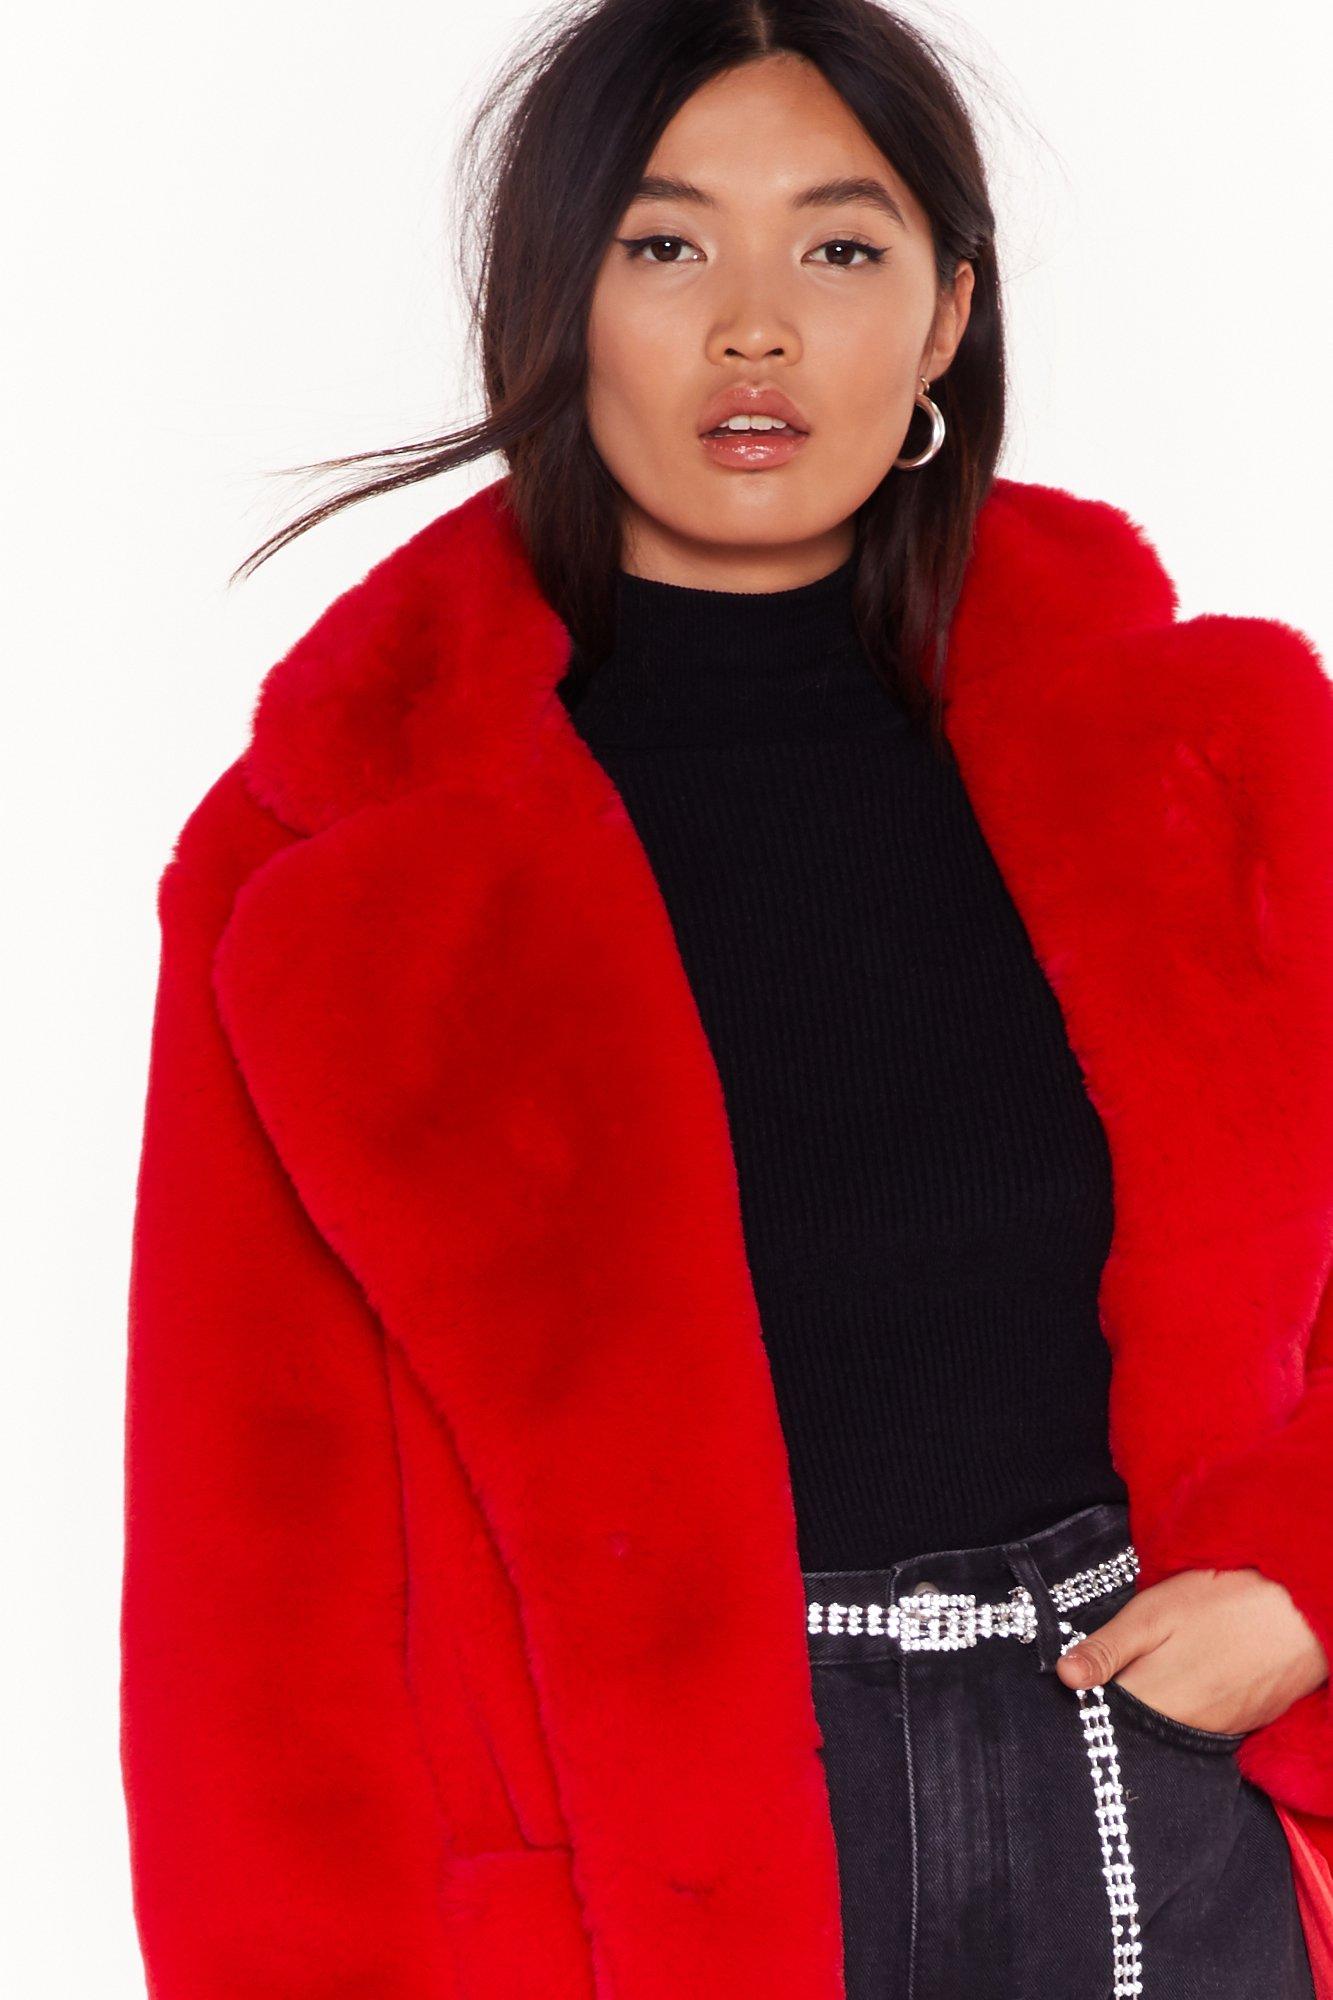 red faux fur jacket